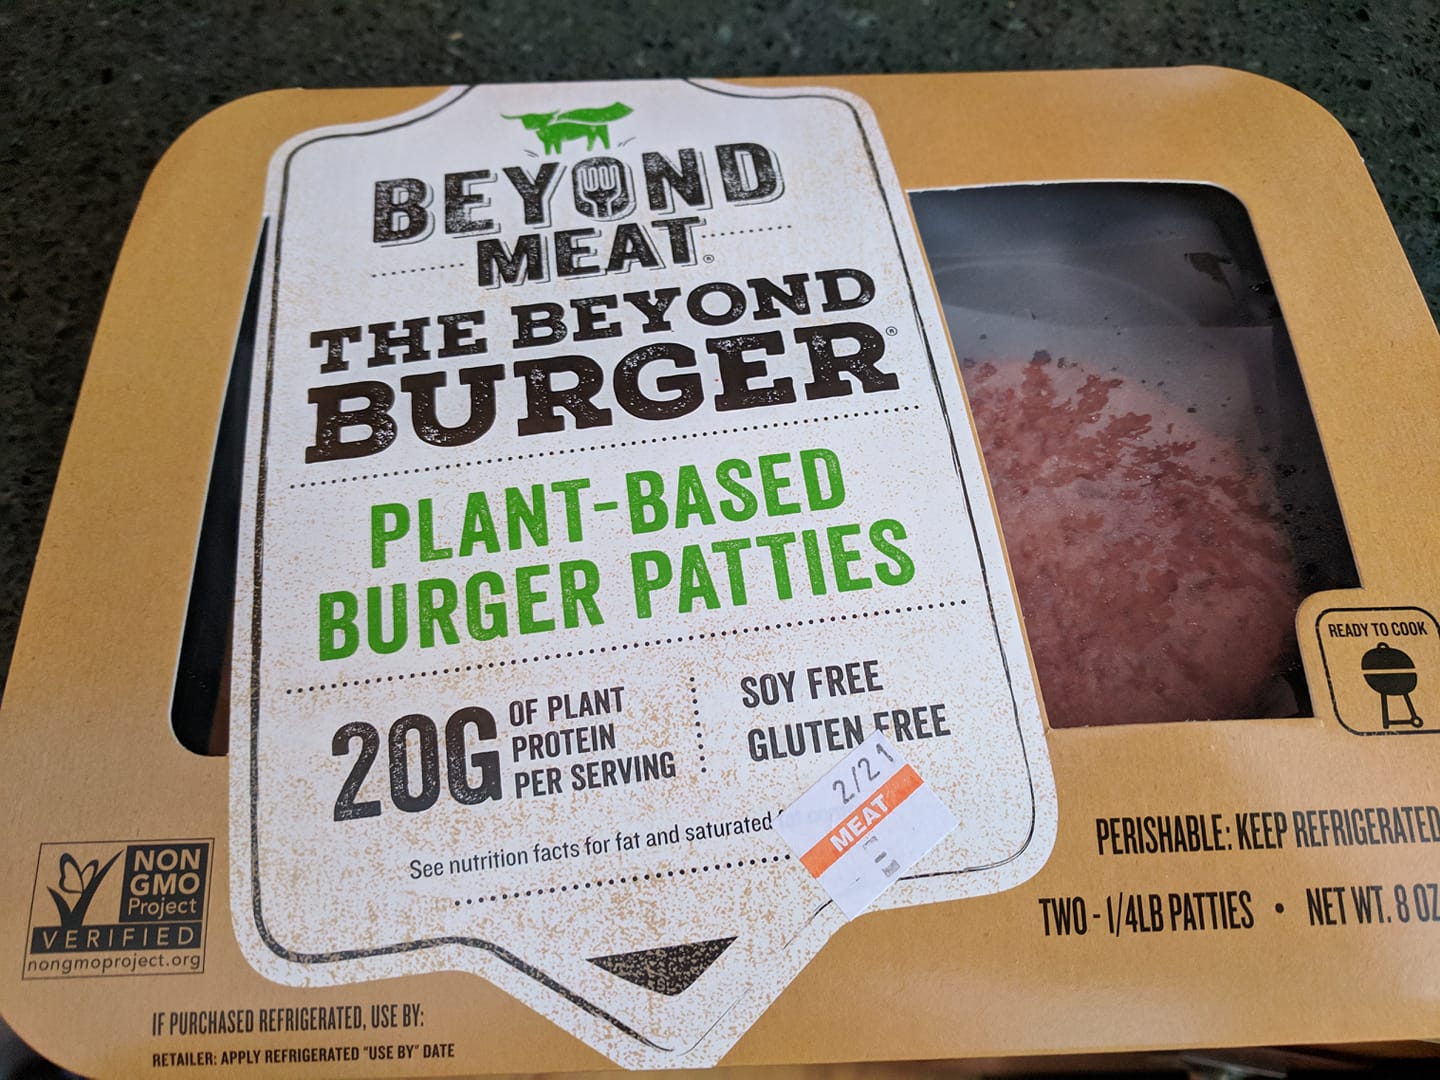 Beyond Meat Burger Plant Based Patties, 8 oz (Pack of 8)